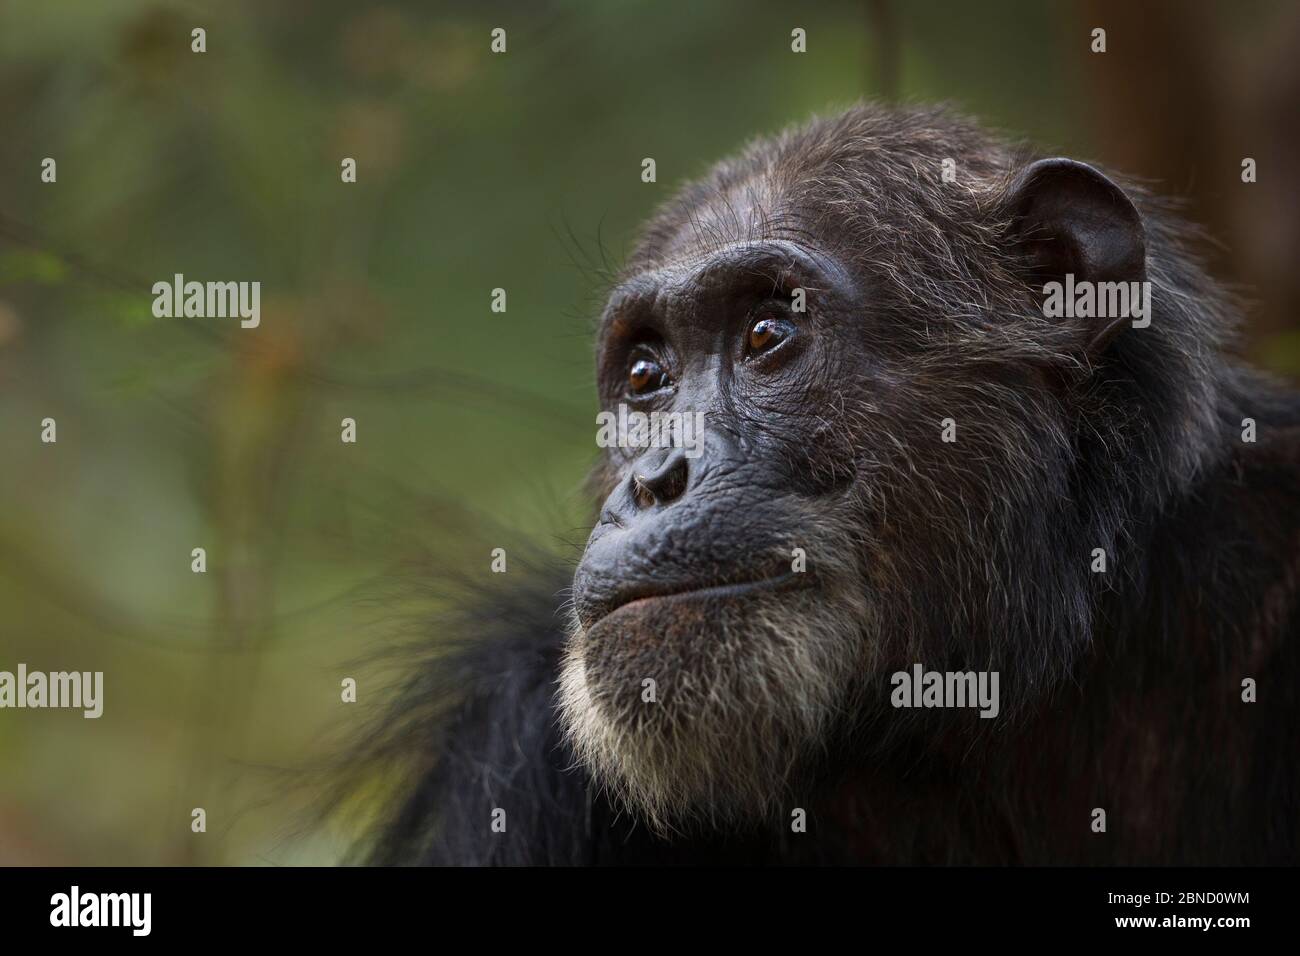 Eastern chimpanzee (Pan troglodytes schweinfurtheii) adult male 'Frodo' aged 35 years portrait. Gombe National Park, Tanzania. Stock Photo